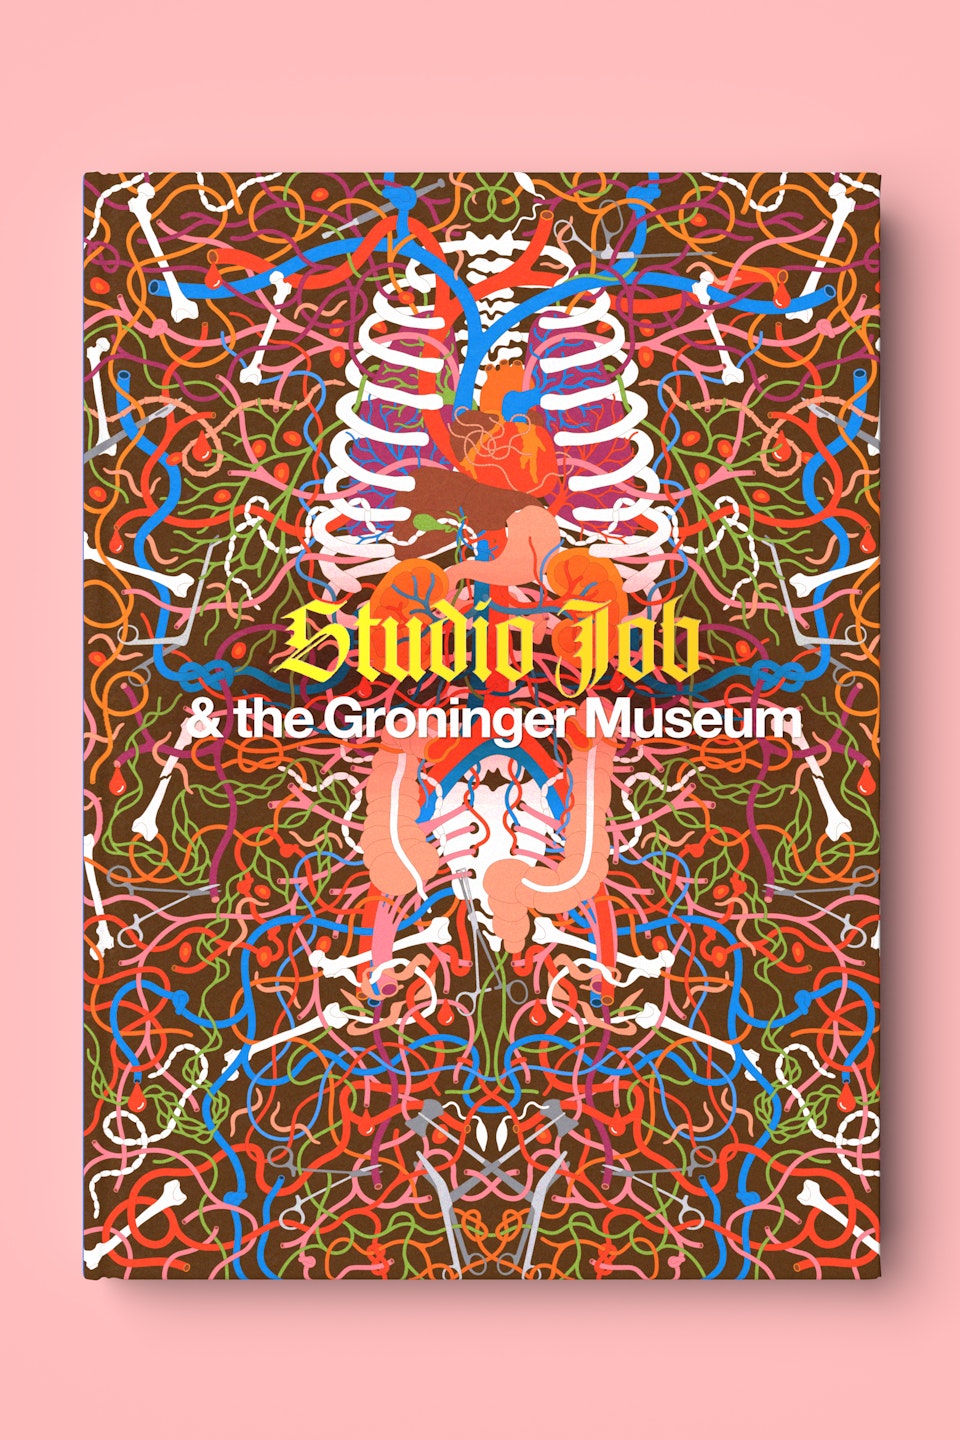 Studio Job & The Groninger Museum